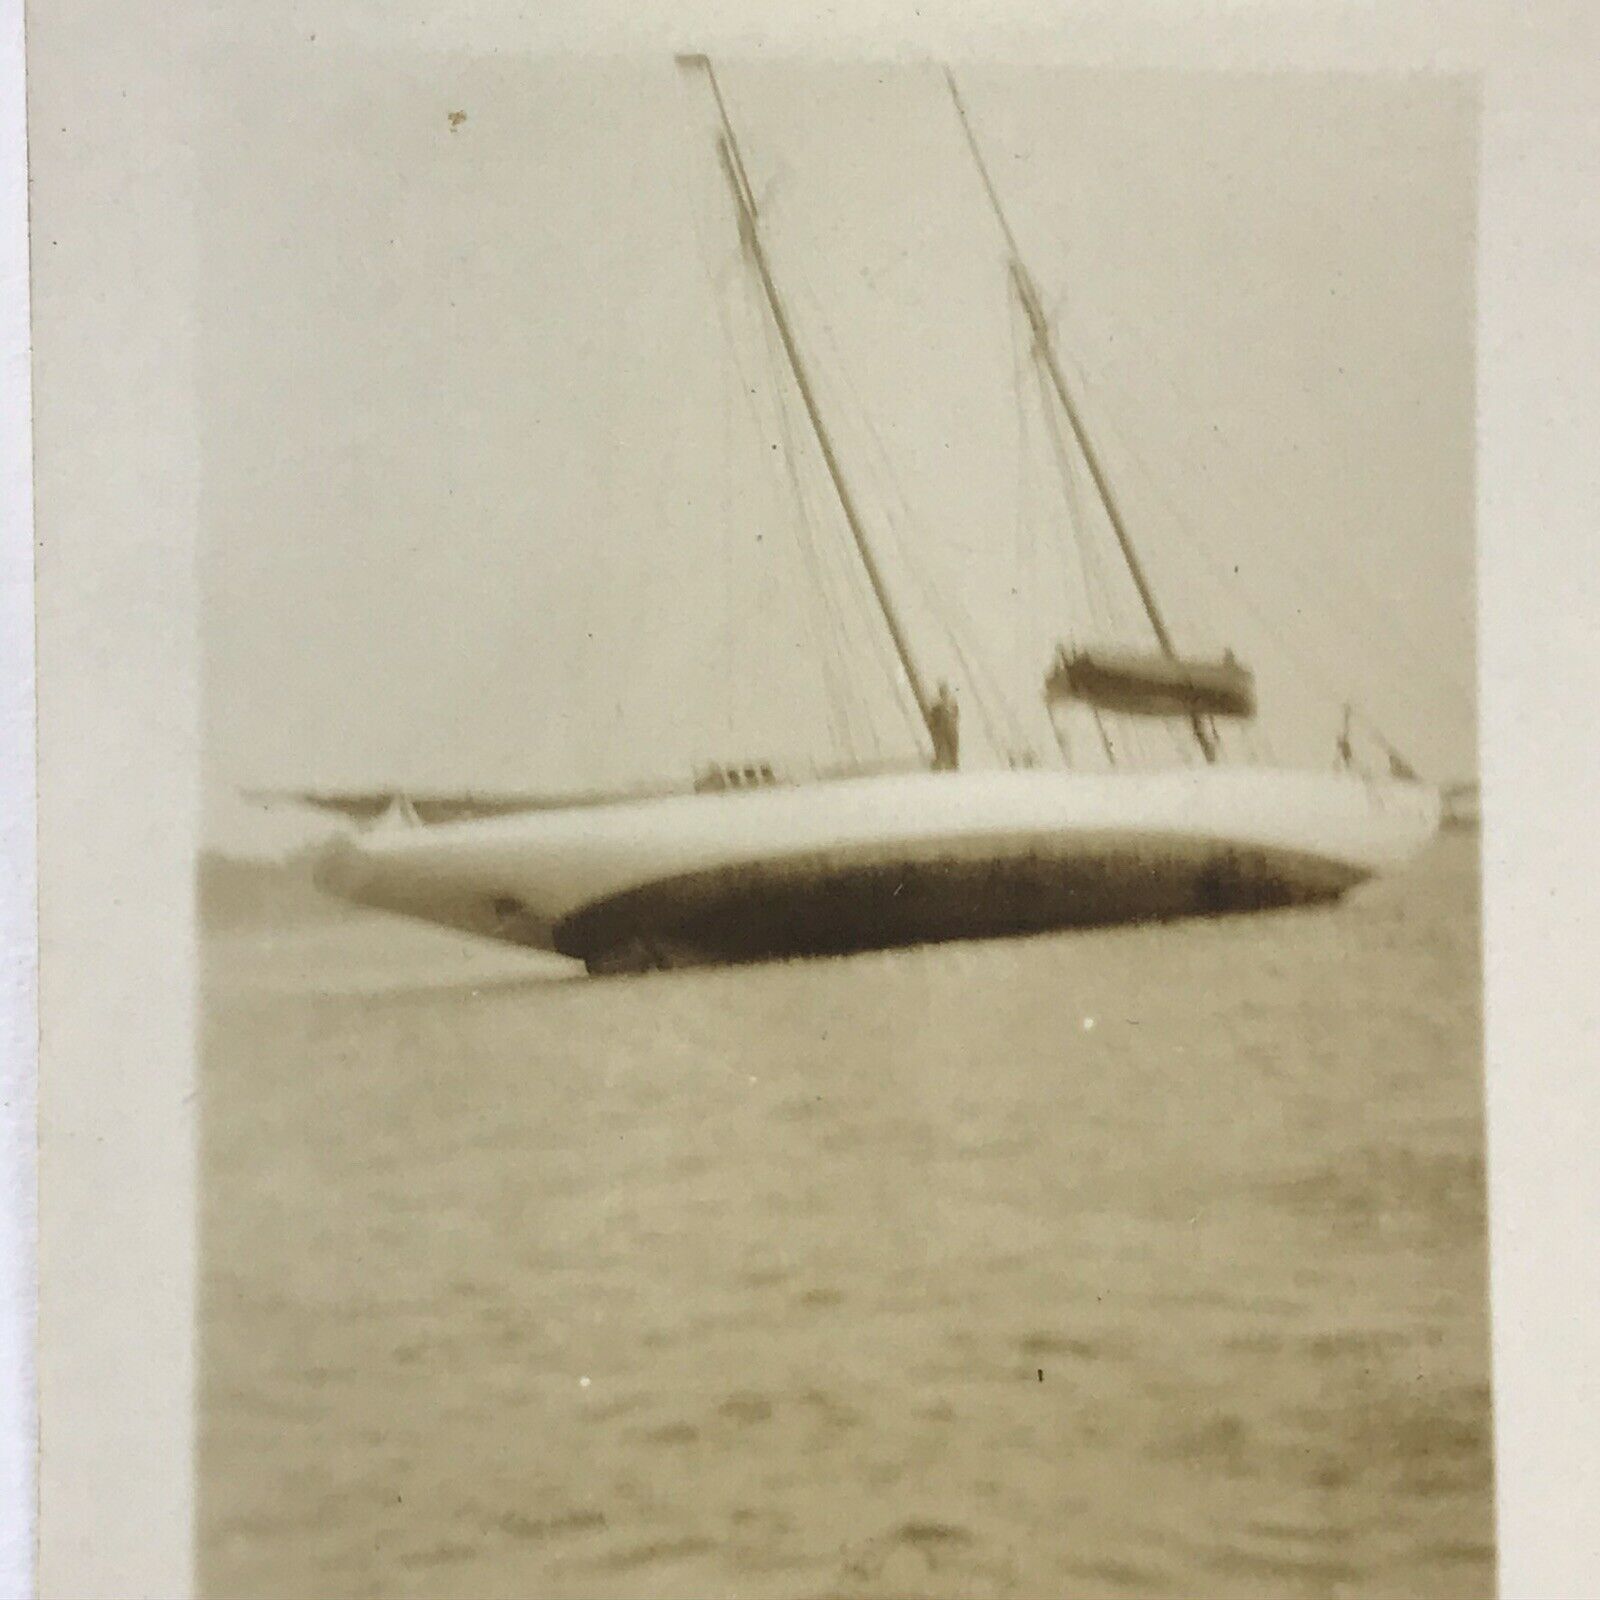 Vintage Sepia Sailboat Boat Vessel Capsized Keeling Over Ocean Water Nautical